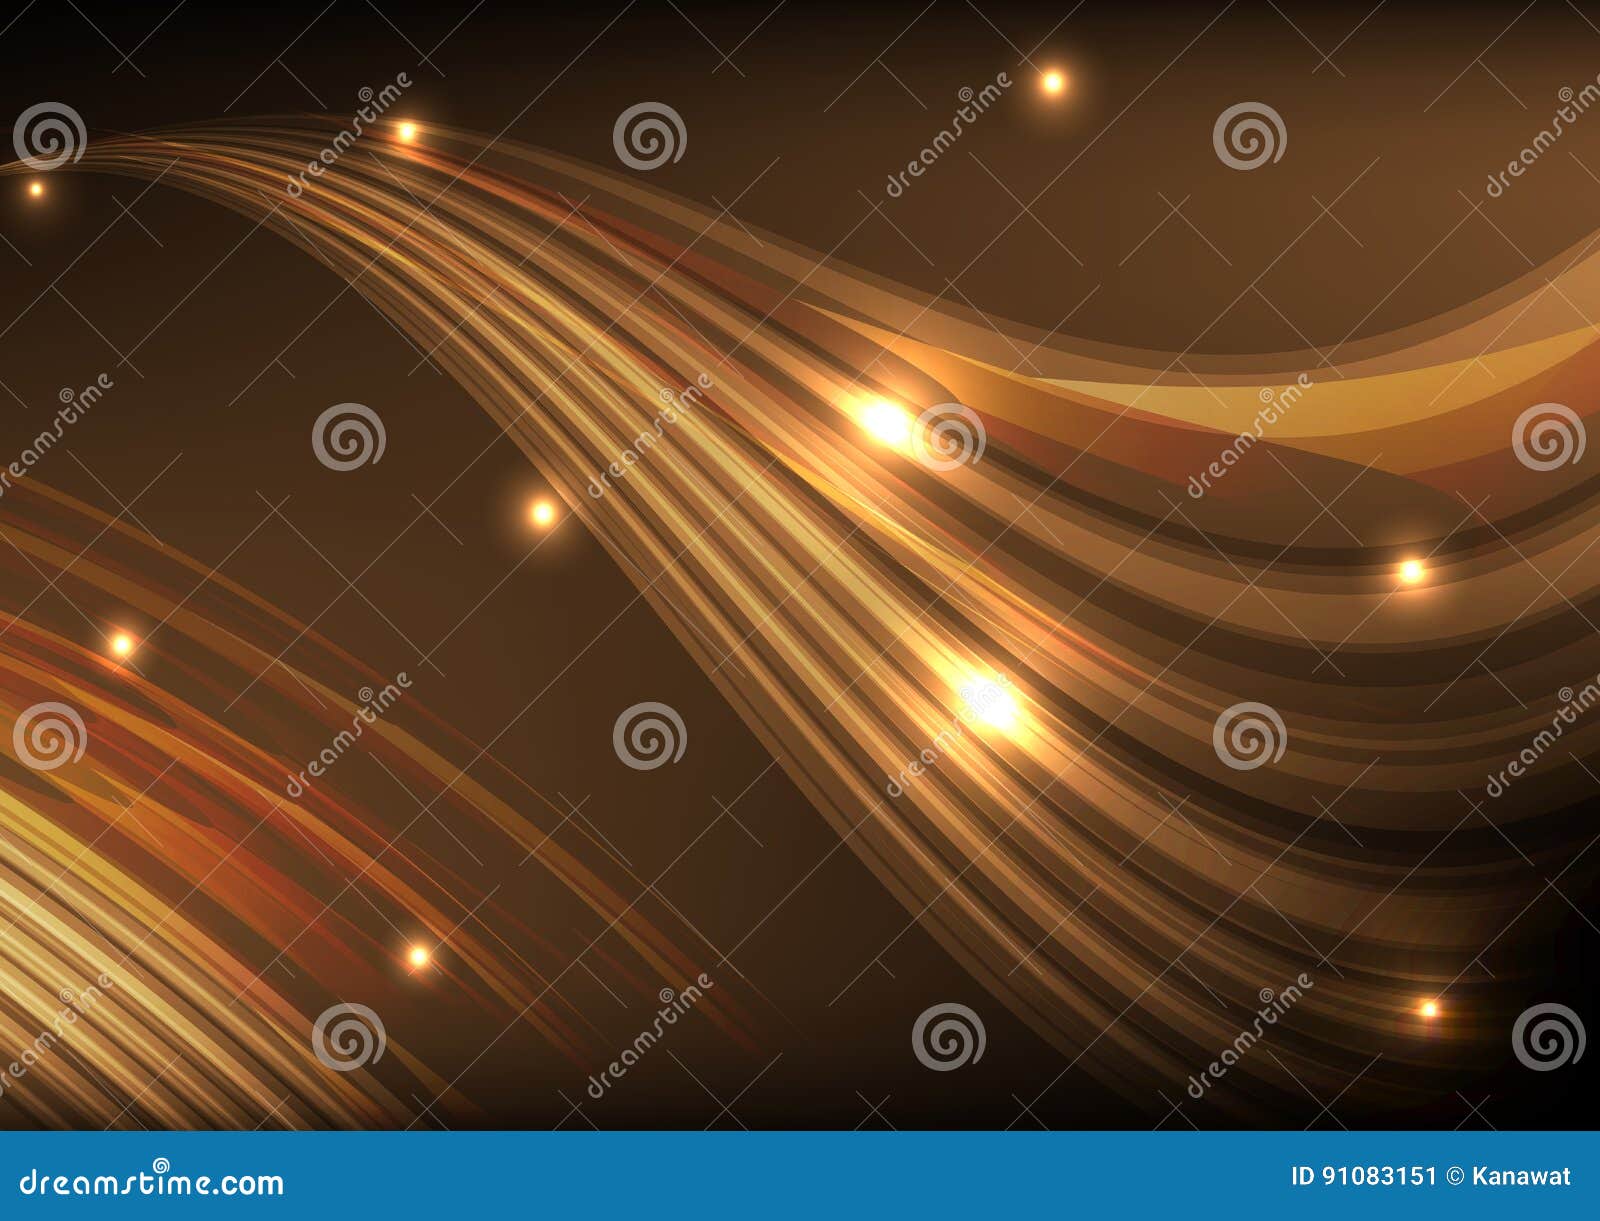 Orange Light Line Wave Abstract Background Vector Stock Vector ...